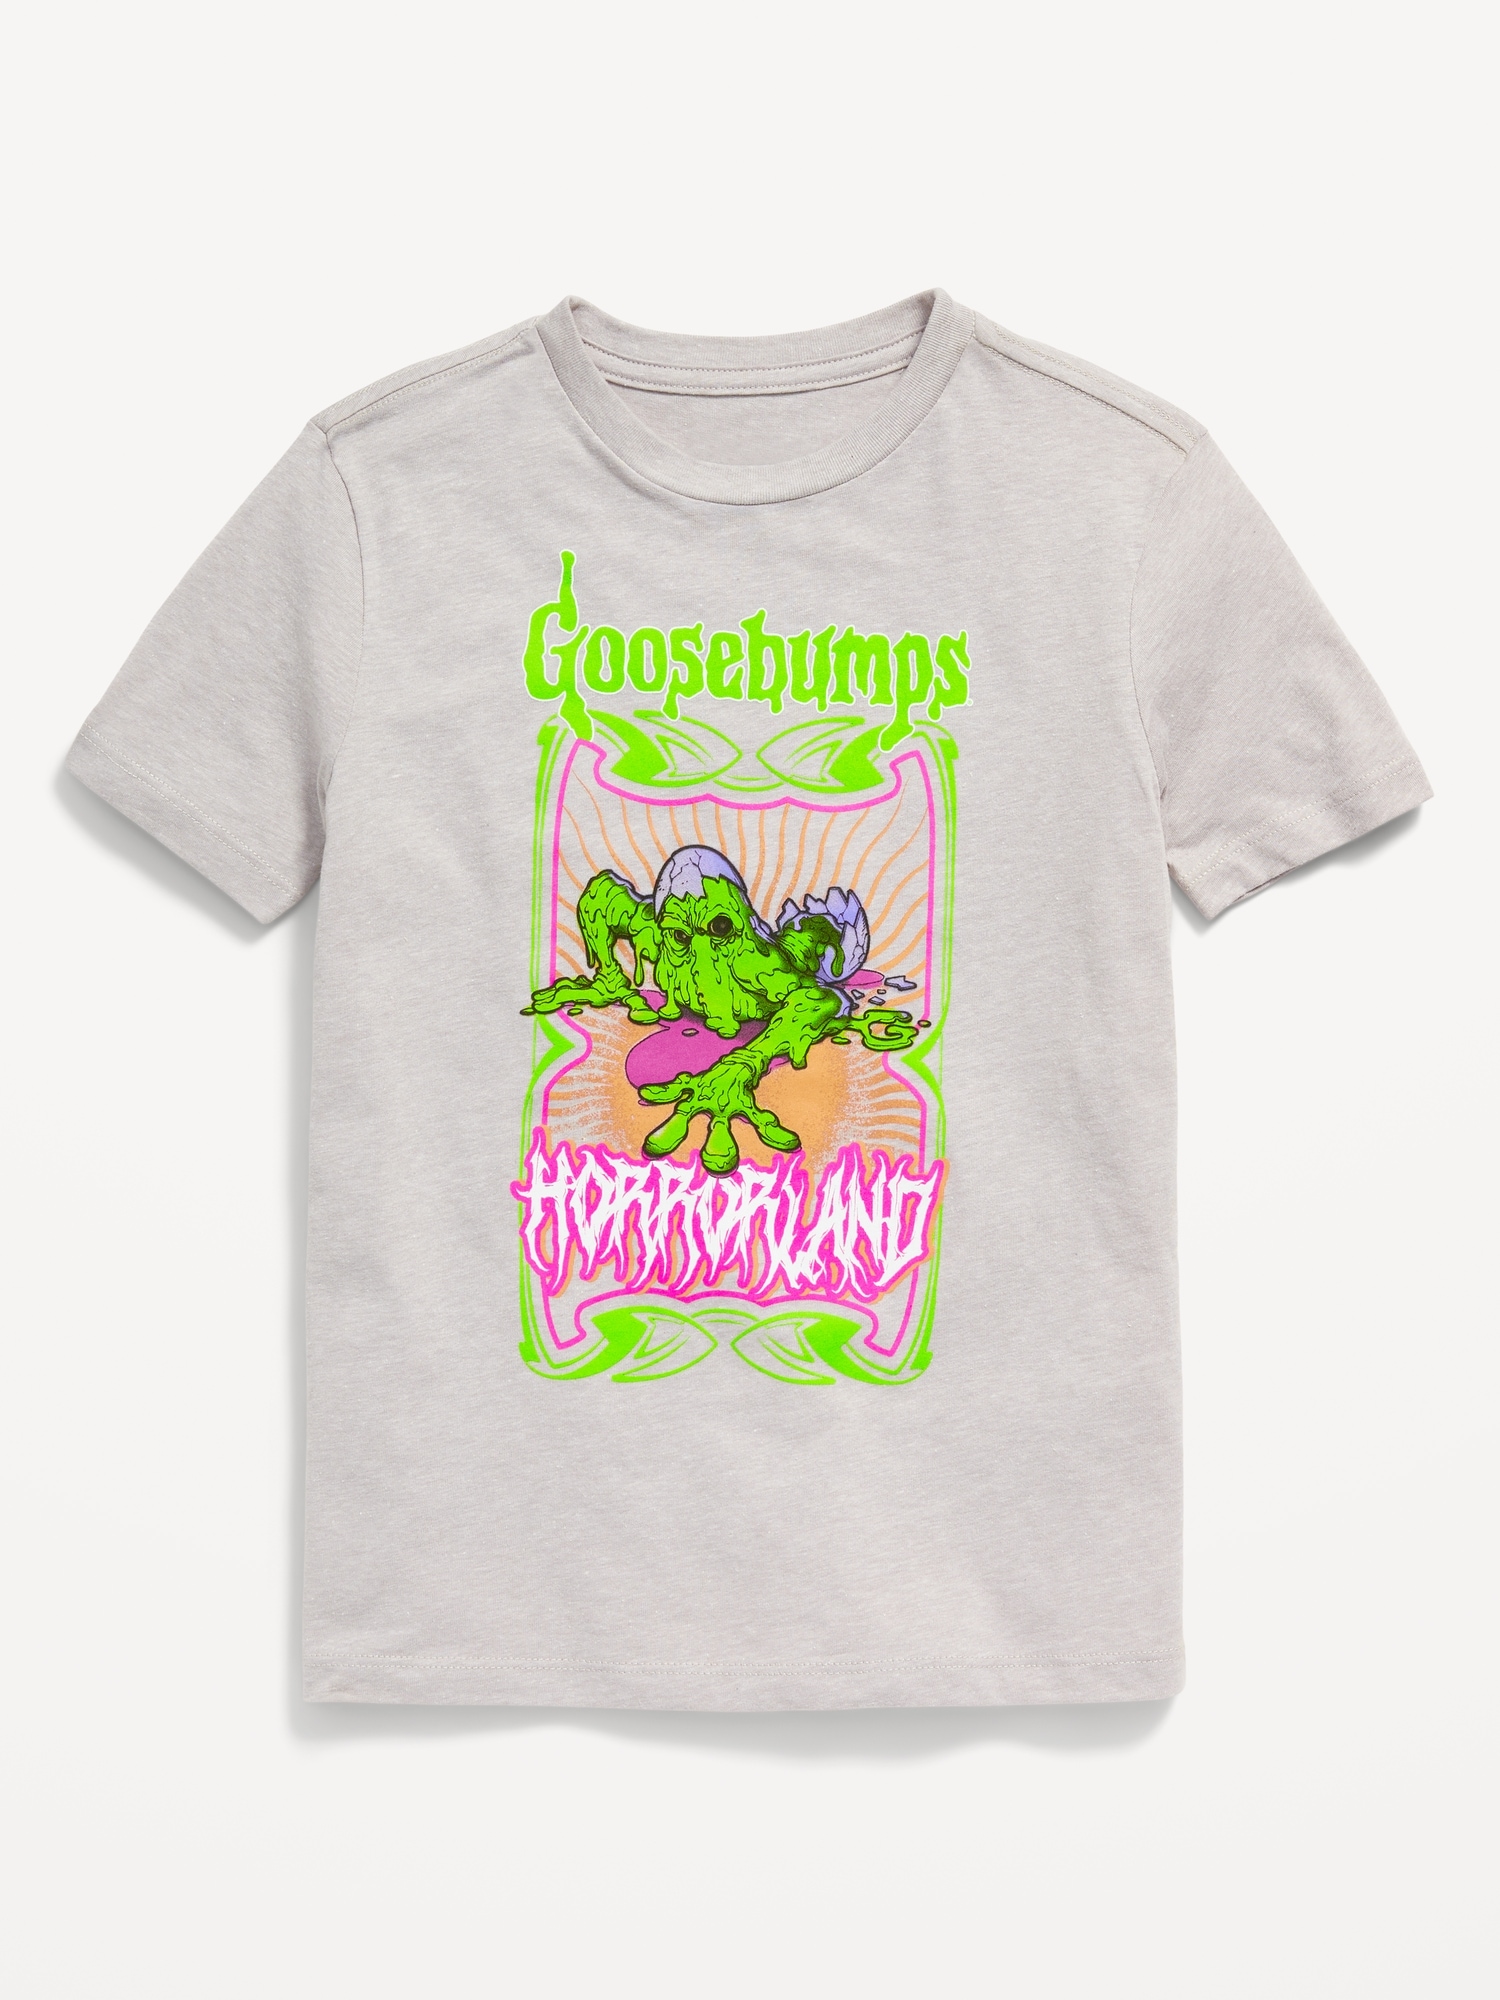 Goosebumps™ Gender-Neutral Graphic T-Shirt for Kids | Old Navy